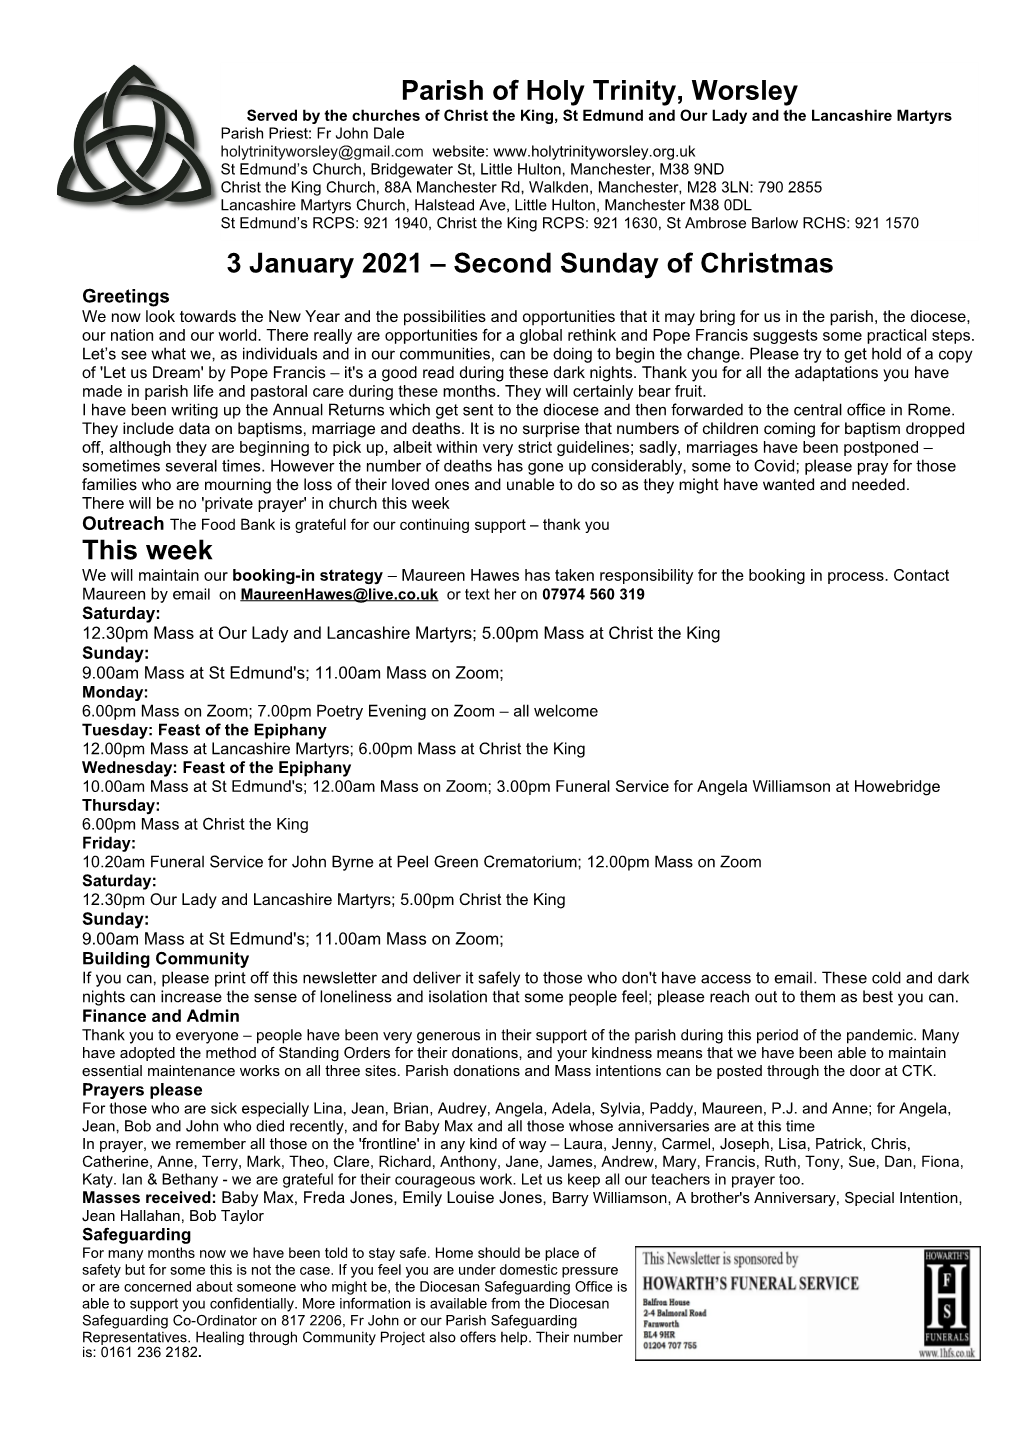 Second Sunday of Christmas This Week Parish